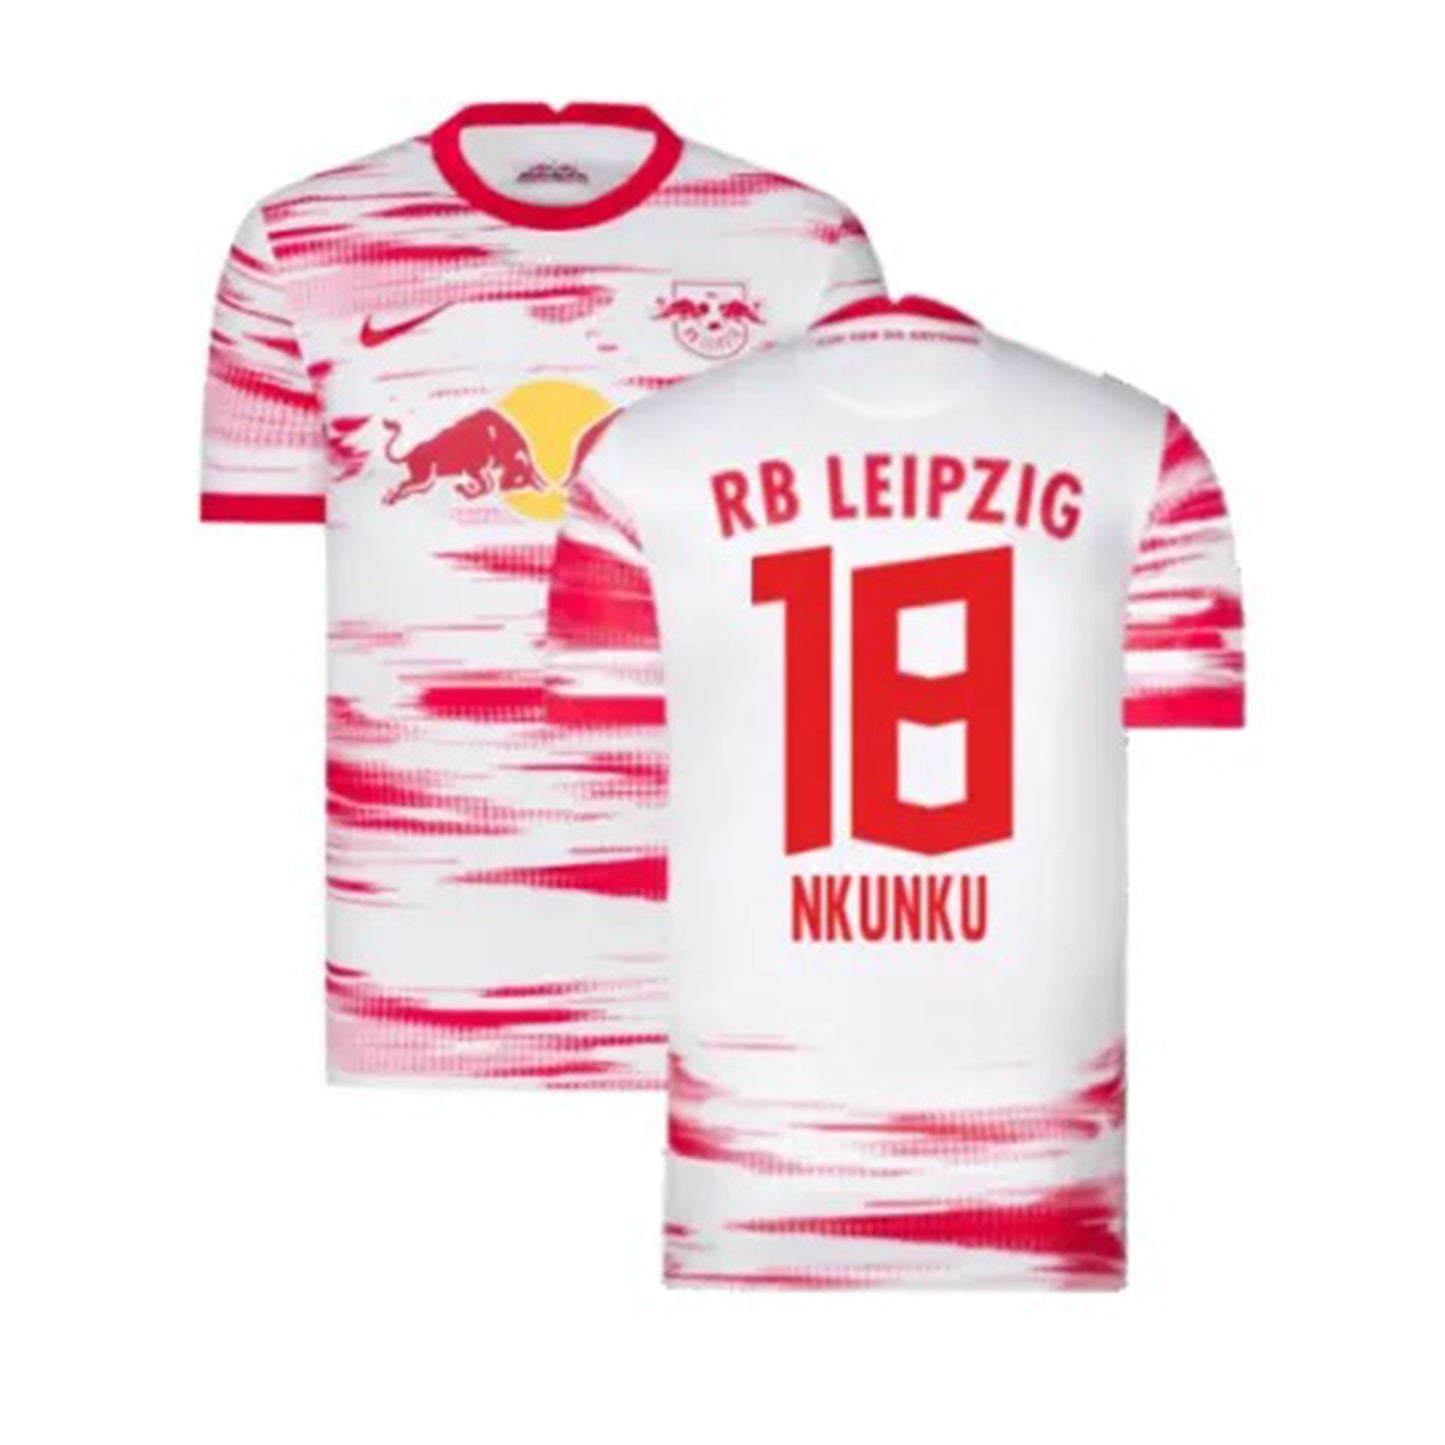 Christopher Nkunku RB Leipzig 18 Jersey